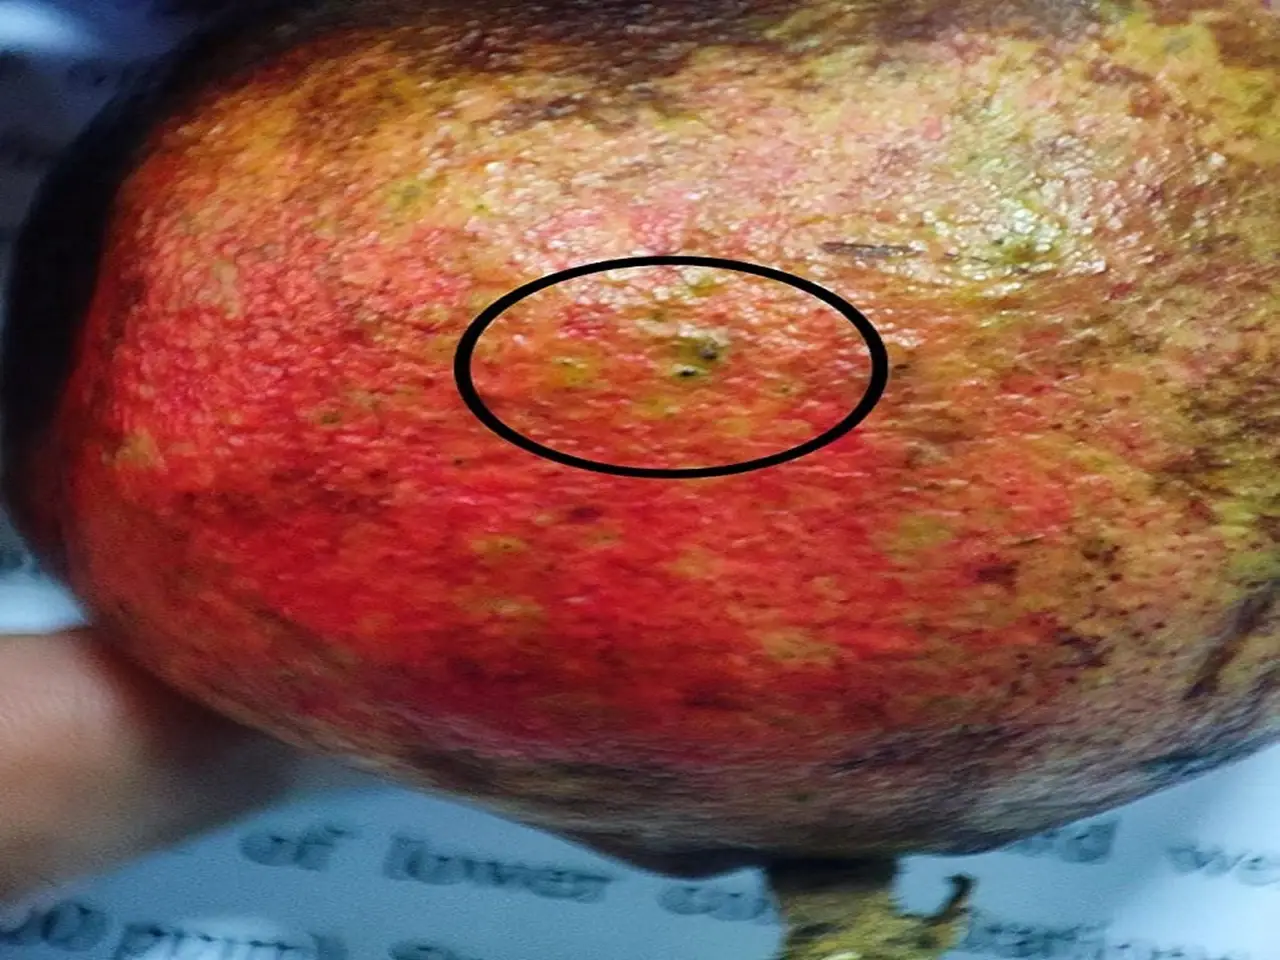 Alternaria fruit spot cqan be seen as a result of Alternaria alternata is a critical plant pathogen that causes black spot disease in  pomegranate.